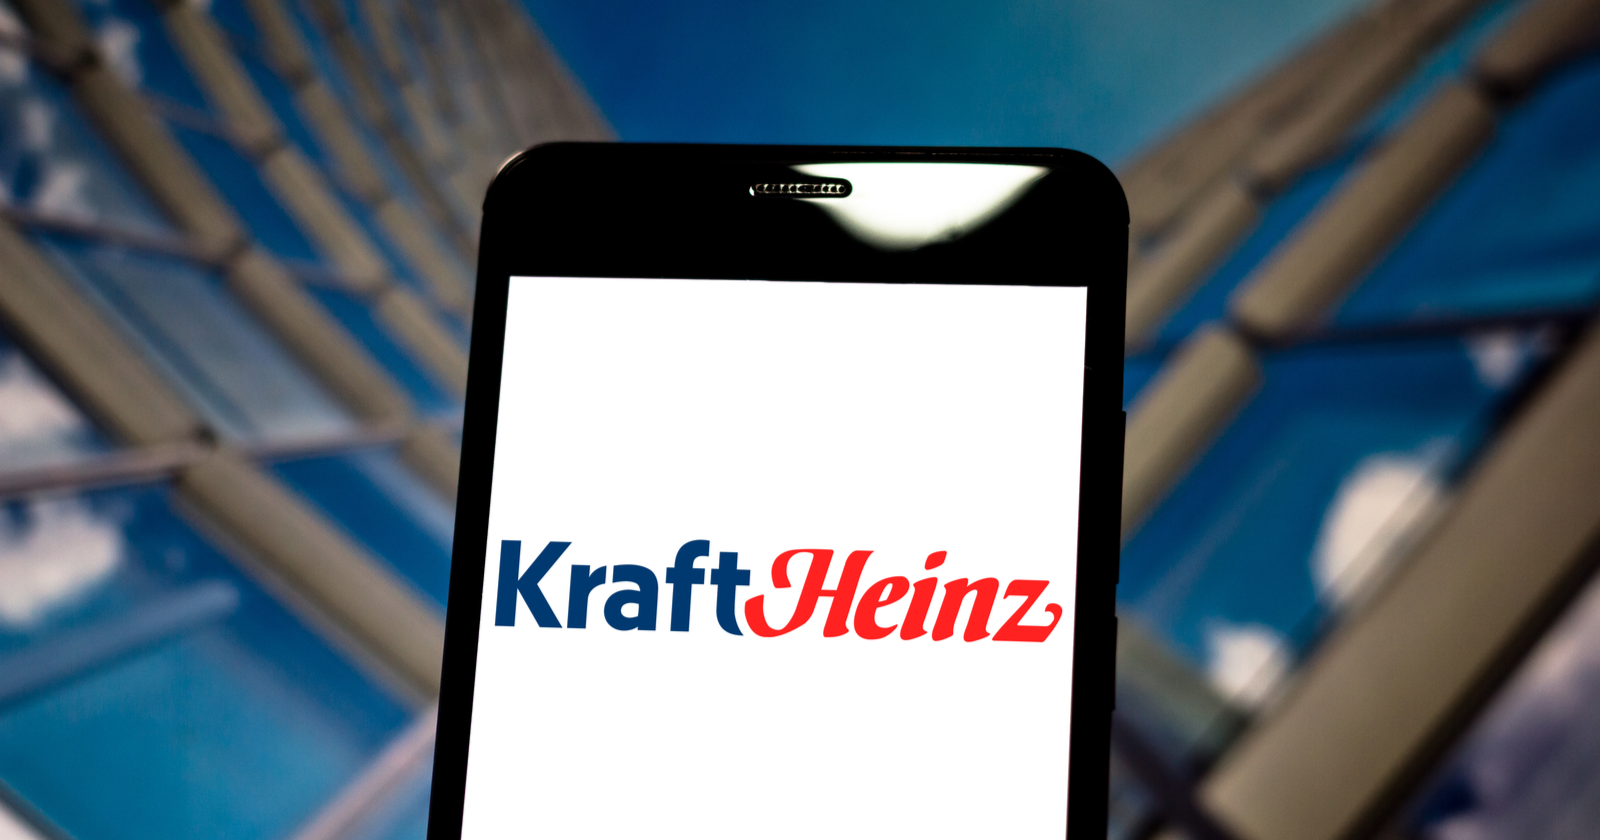 Kraft Heinz - Isn’t Anyone Going to Help That Poor Brand